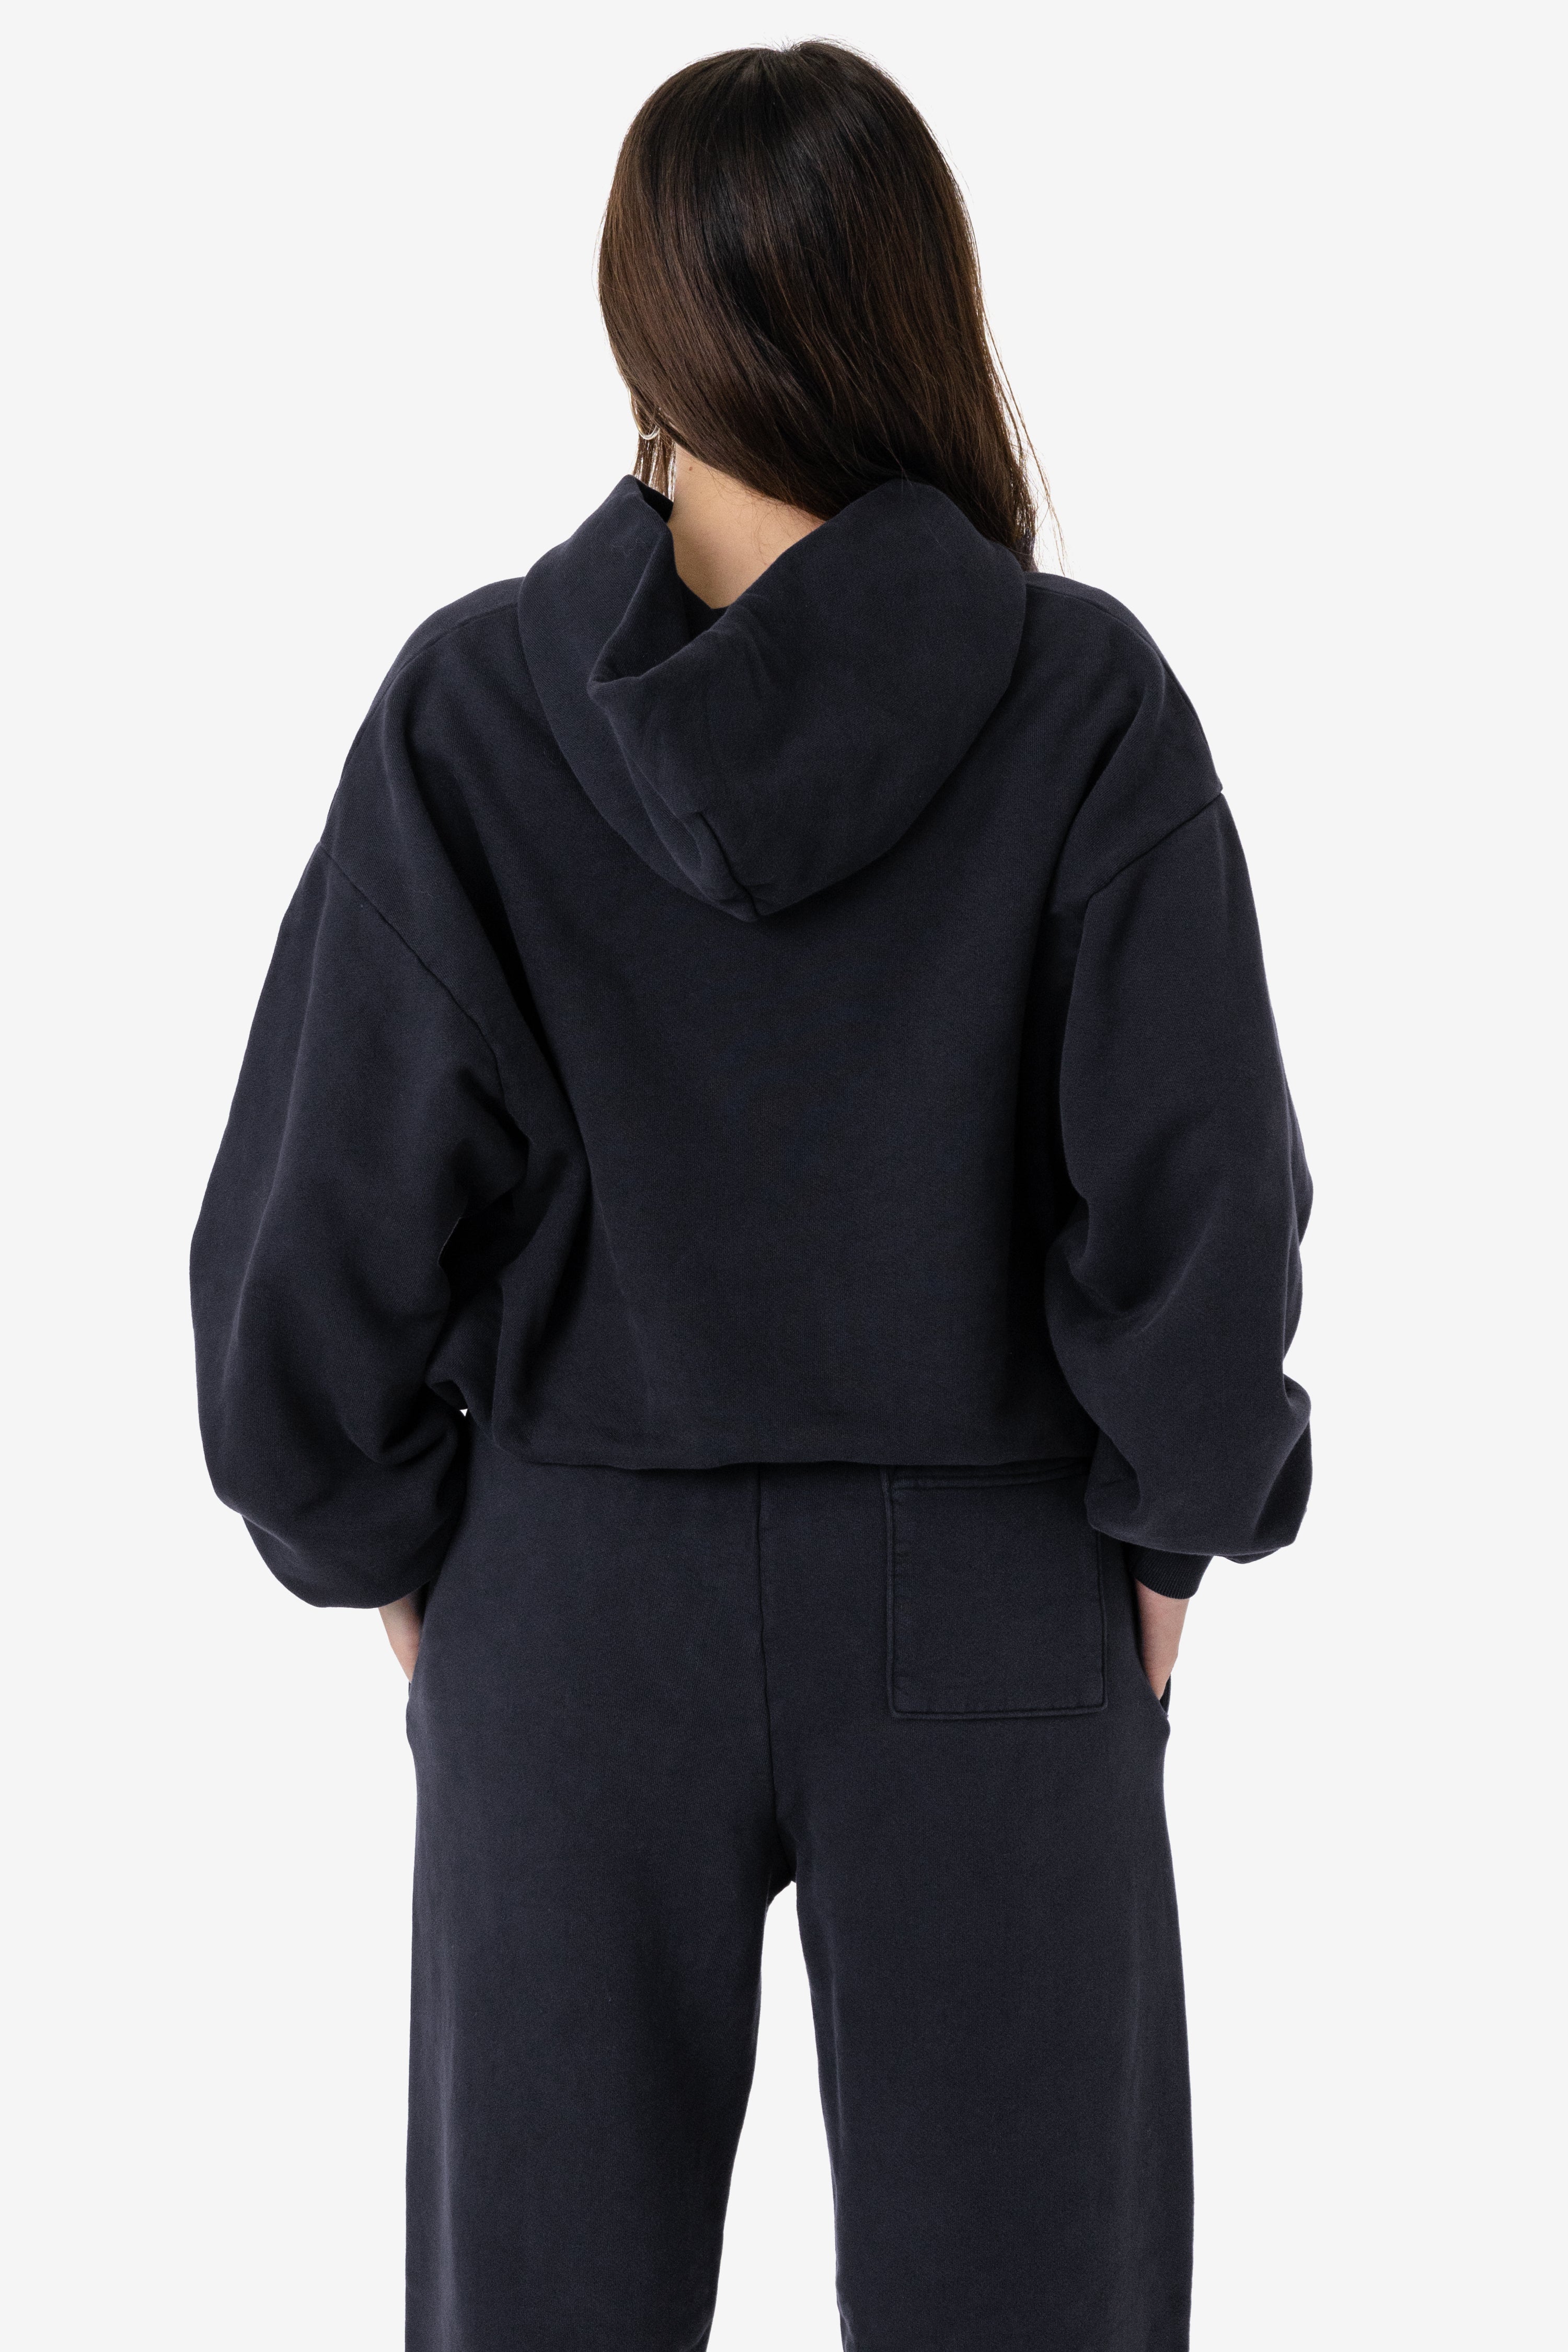 PLU09GD - 16oz. Garment Dye Plush Fleece Hooded Pullover Sweatshirt ...